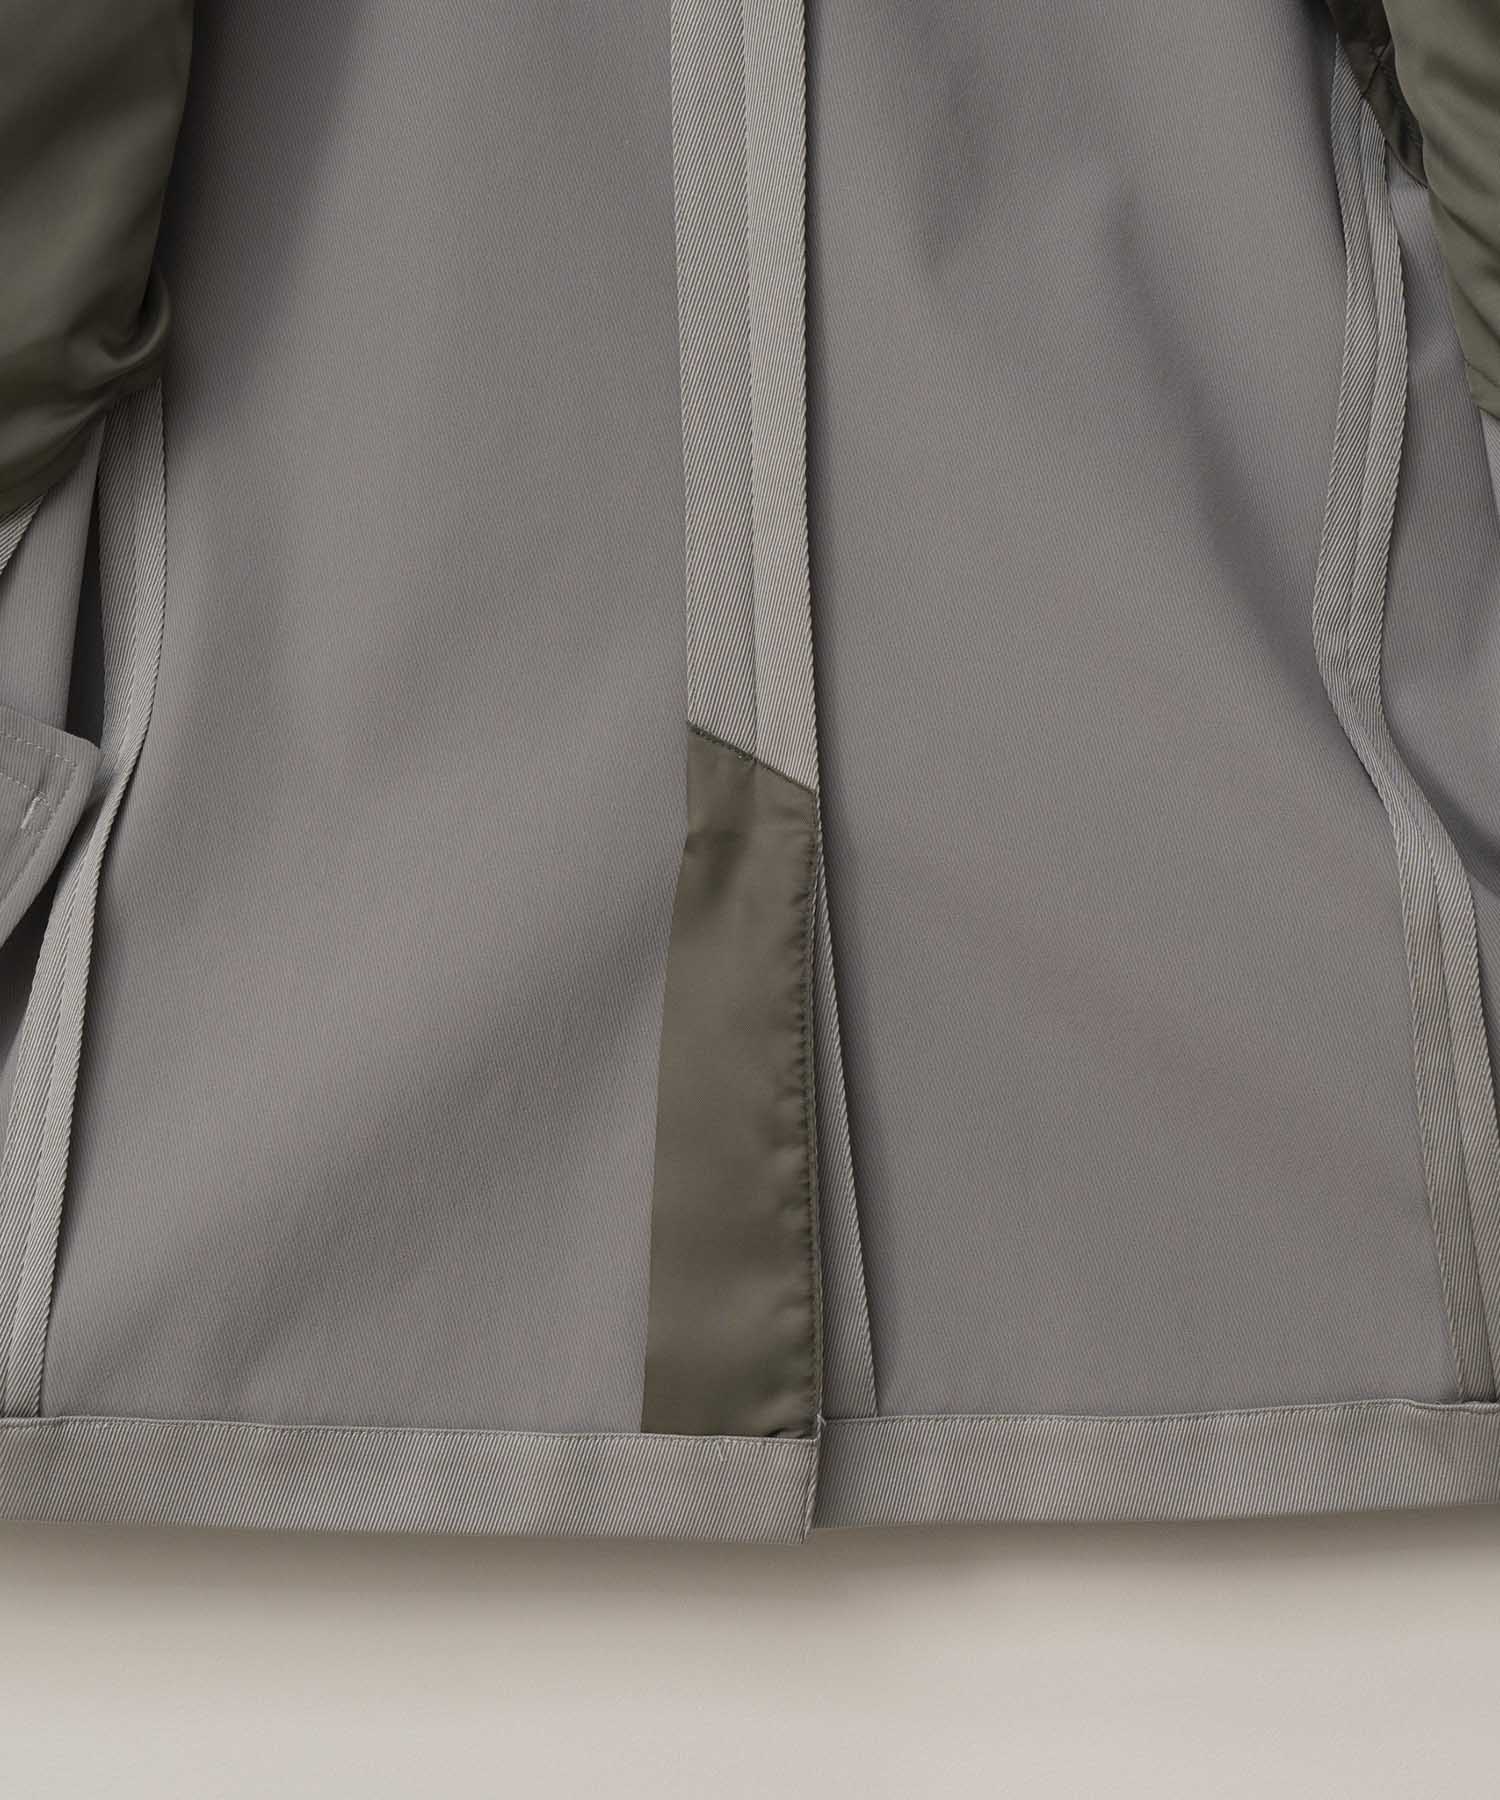 【24SS PRE-ORDER】Triacetate Dress-Fit 2B Tailored Jacket